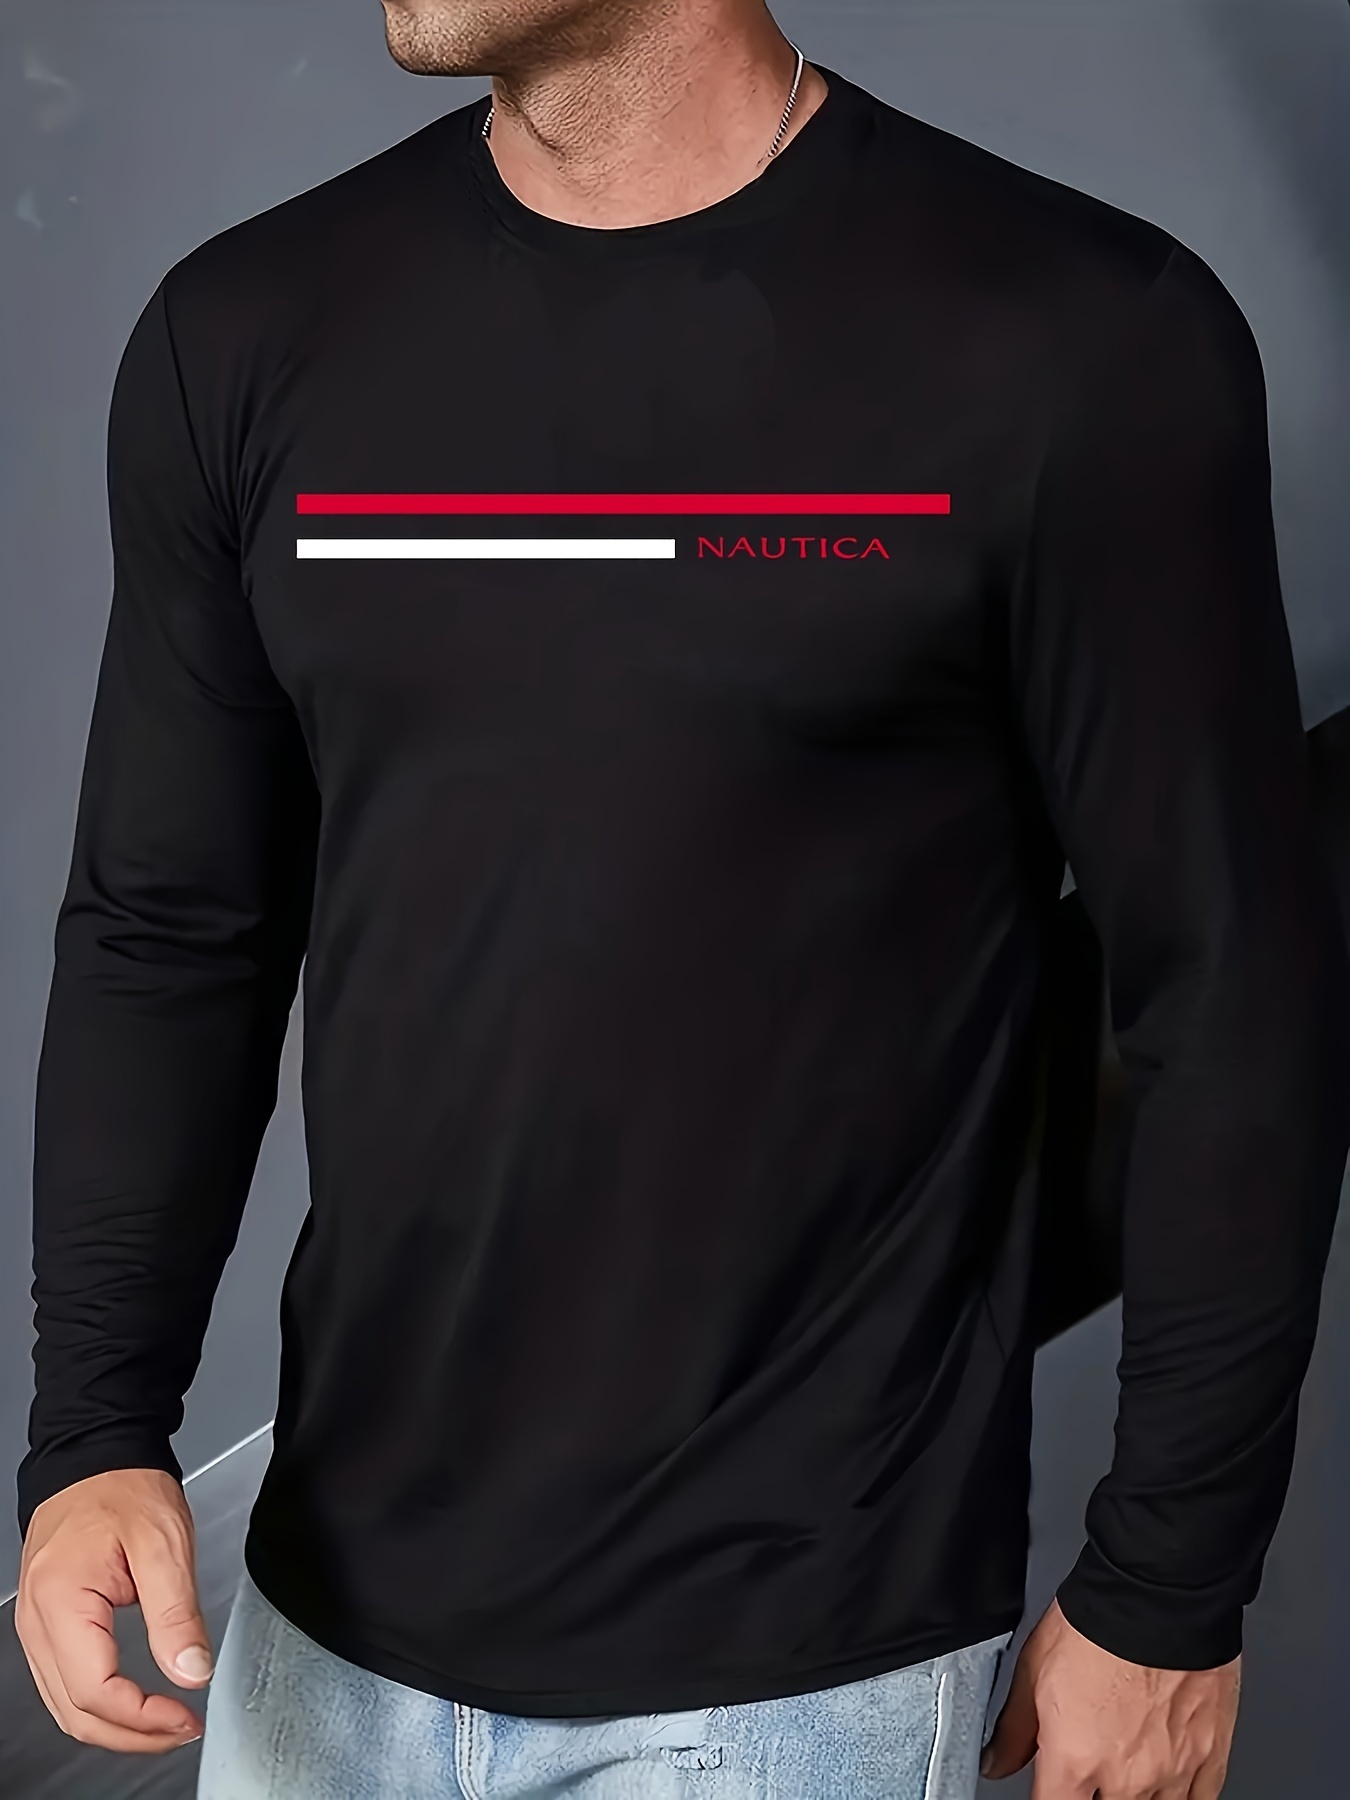 Men's Compression T shirt Long Sleeve Basic Workout Top - Temu